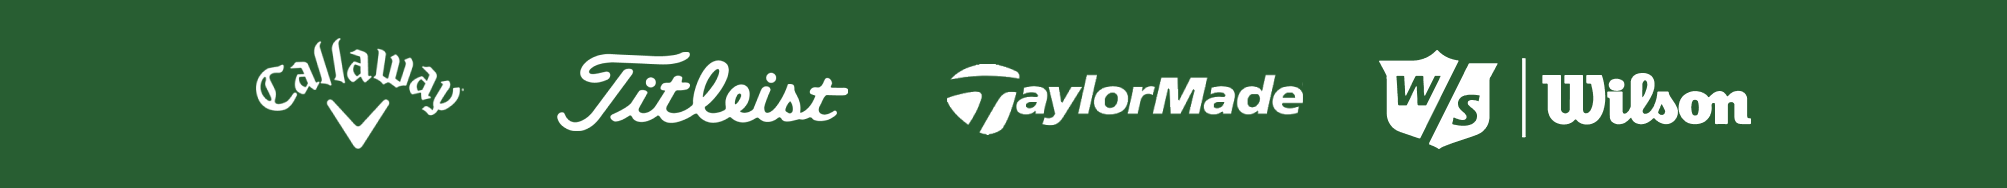 Golf club logos - Callaway, Titleist, Taylormade and Wilson